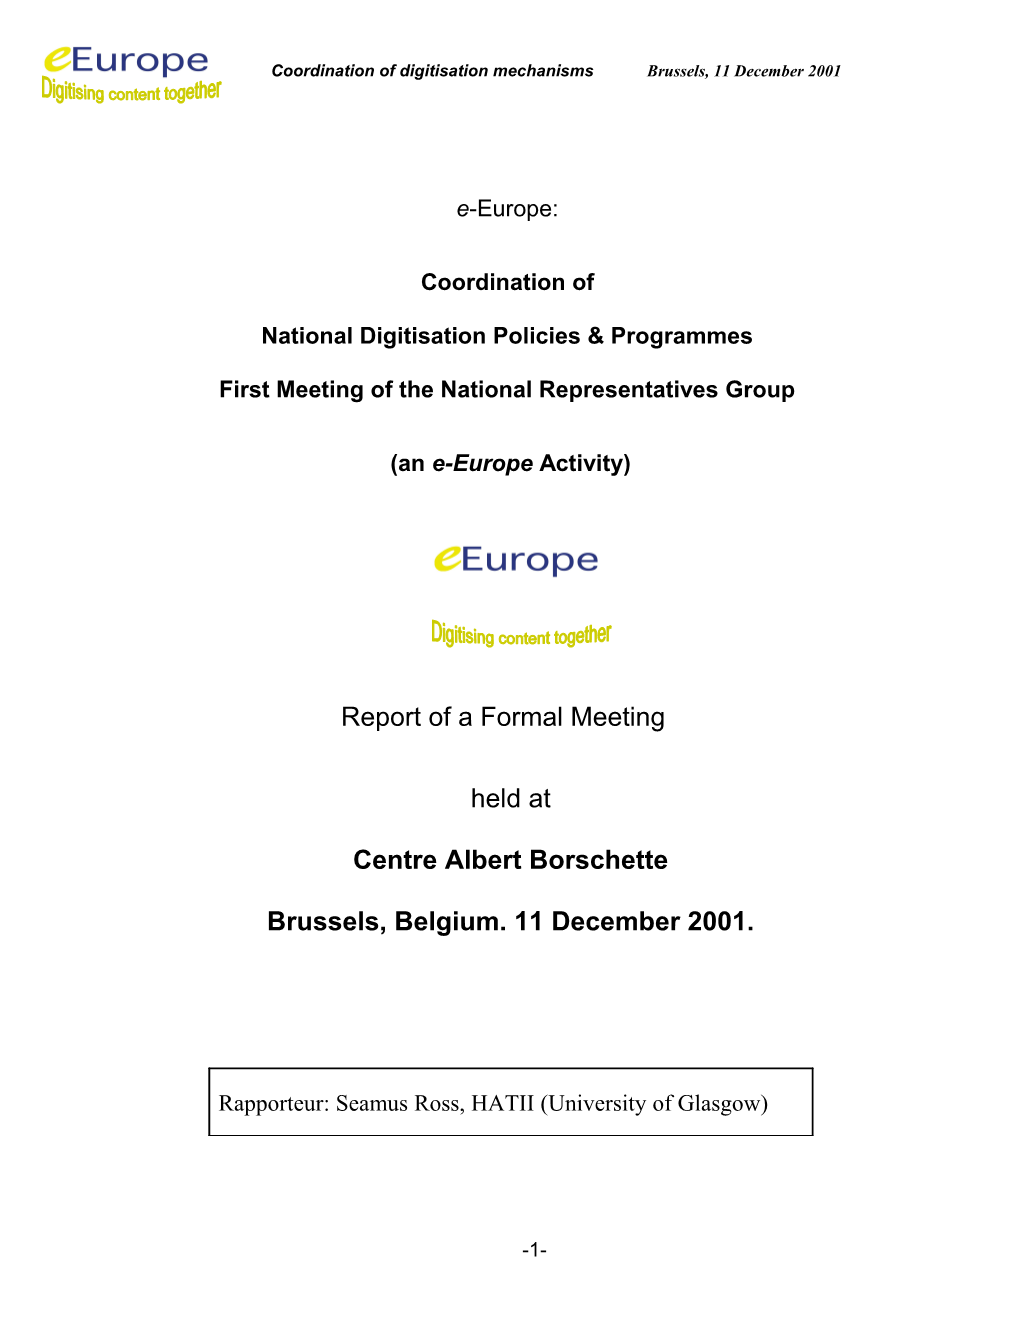 National Digitisation Policies & Programmes